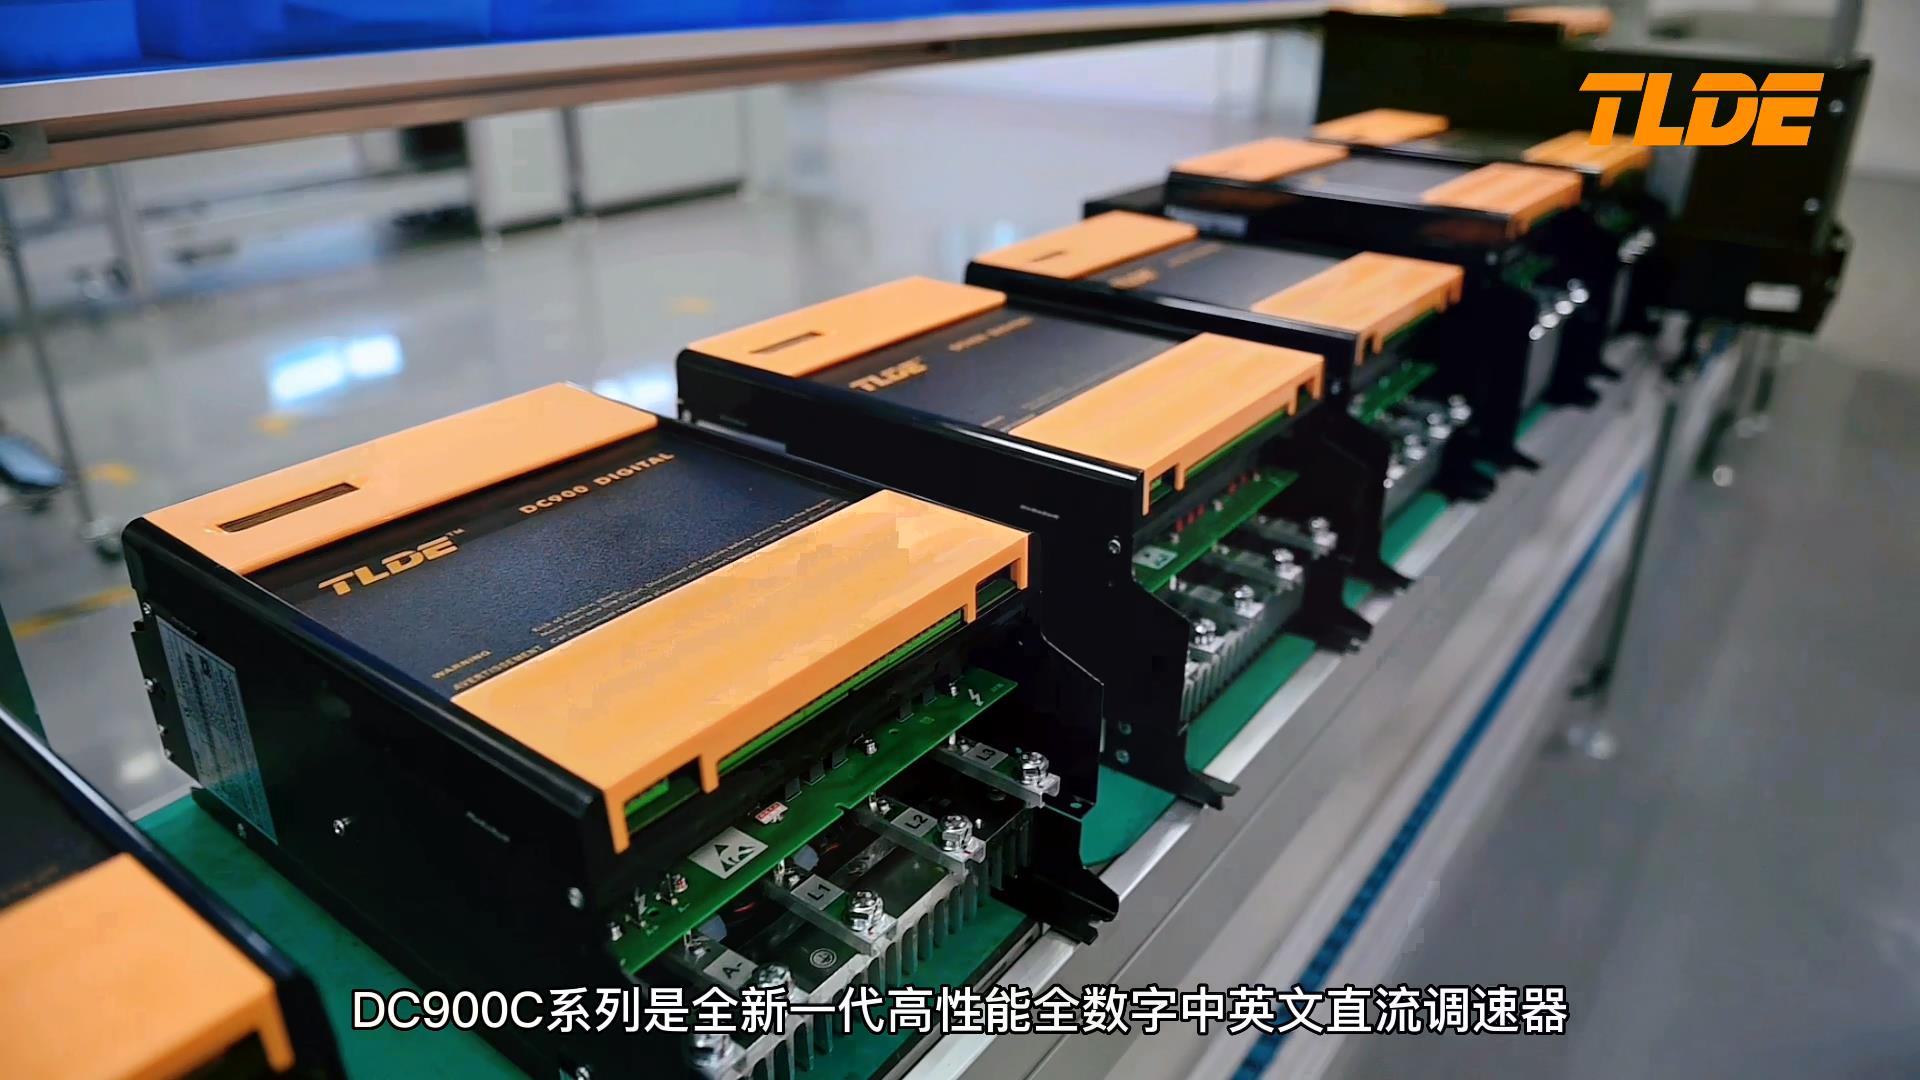 DC900C系列中文直流调速器产品展示介绍！TLDE泰莱德自动化推荐！